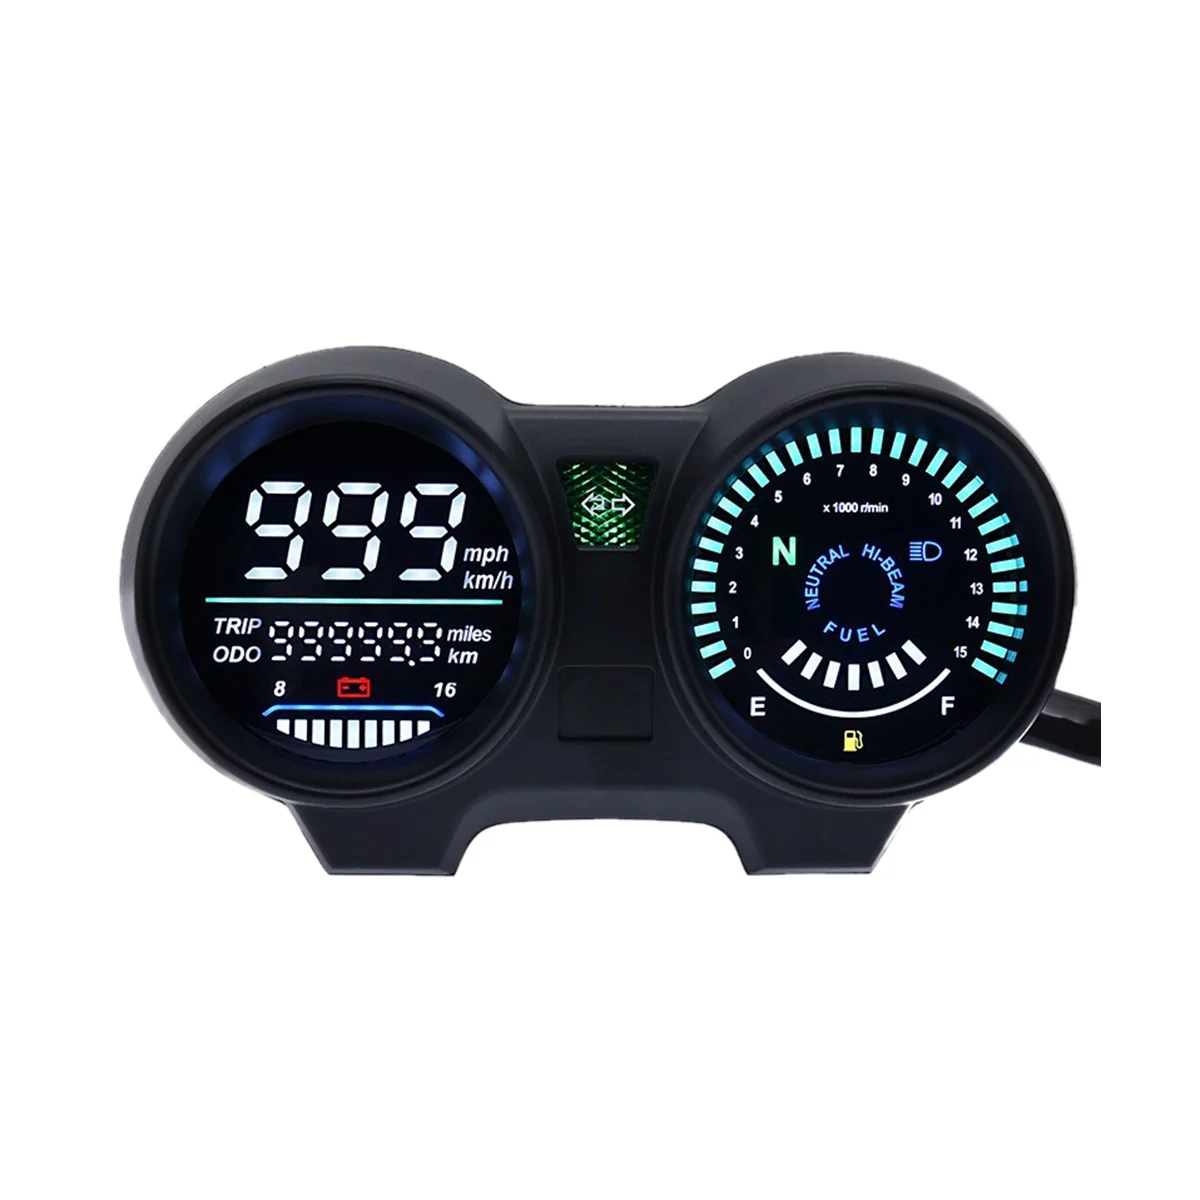 

Motorcycle LED Digital Dashboard Motorcycle RPM Meter Electronics Speedometer for Brazil TITAN 150 Honda CG150 Fan150